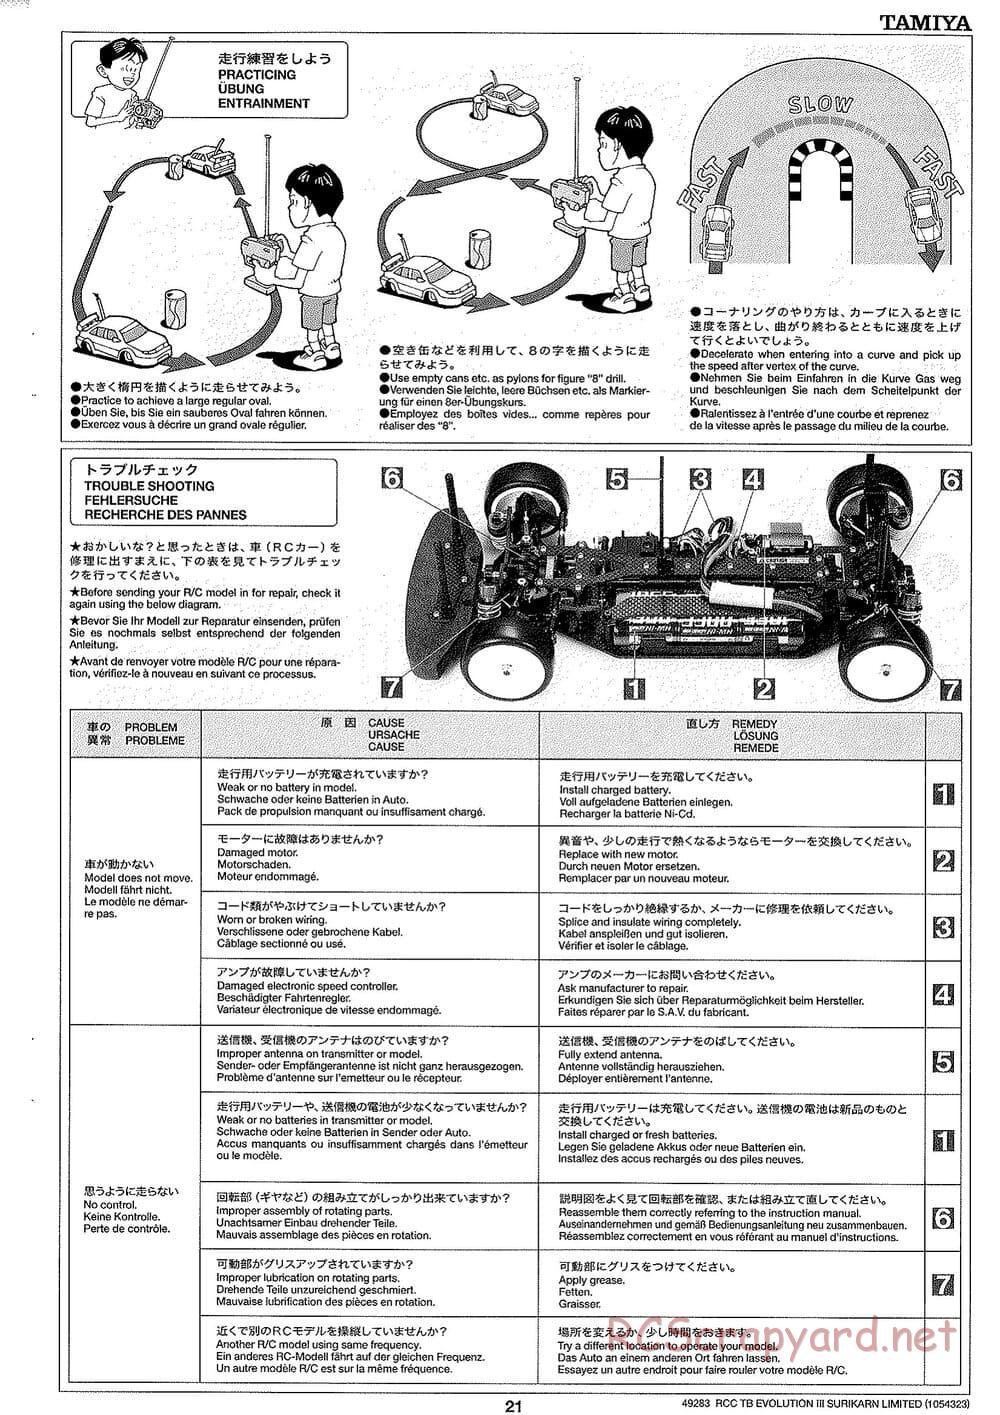 Tamiya - TB Evolution III Surikarn Limited Chassis - Manual - Page 21